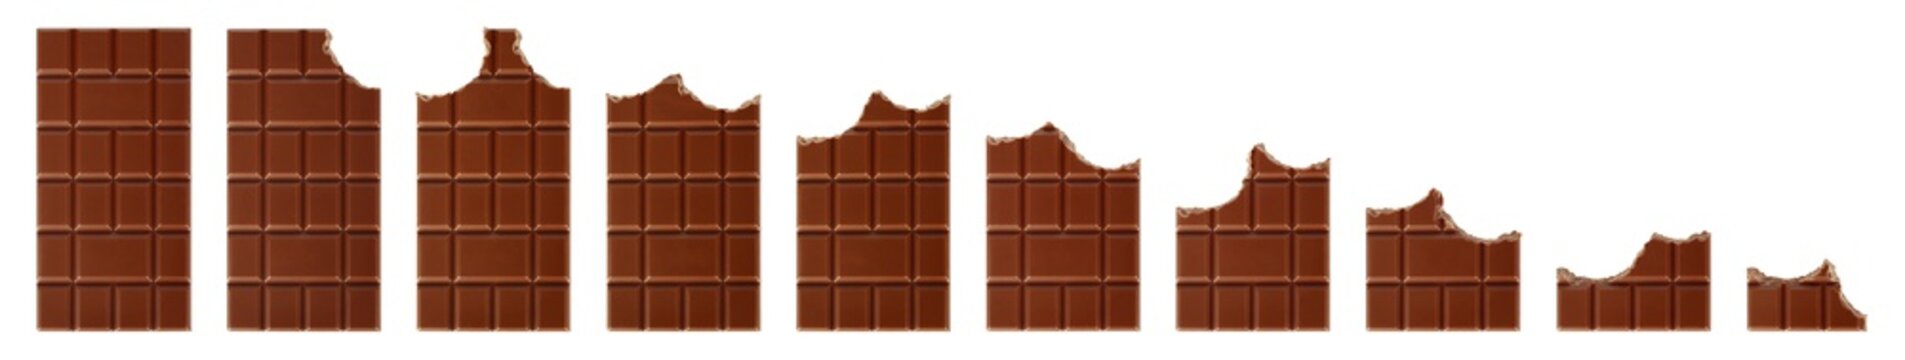 Set of bitten milk chocolate bars isolated on white background